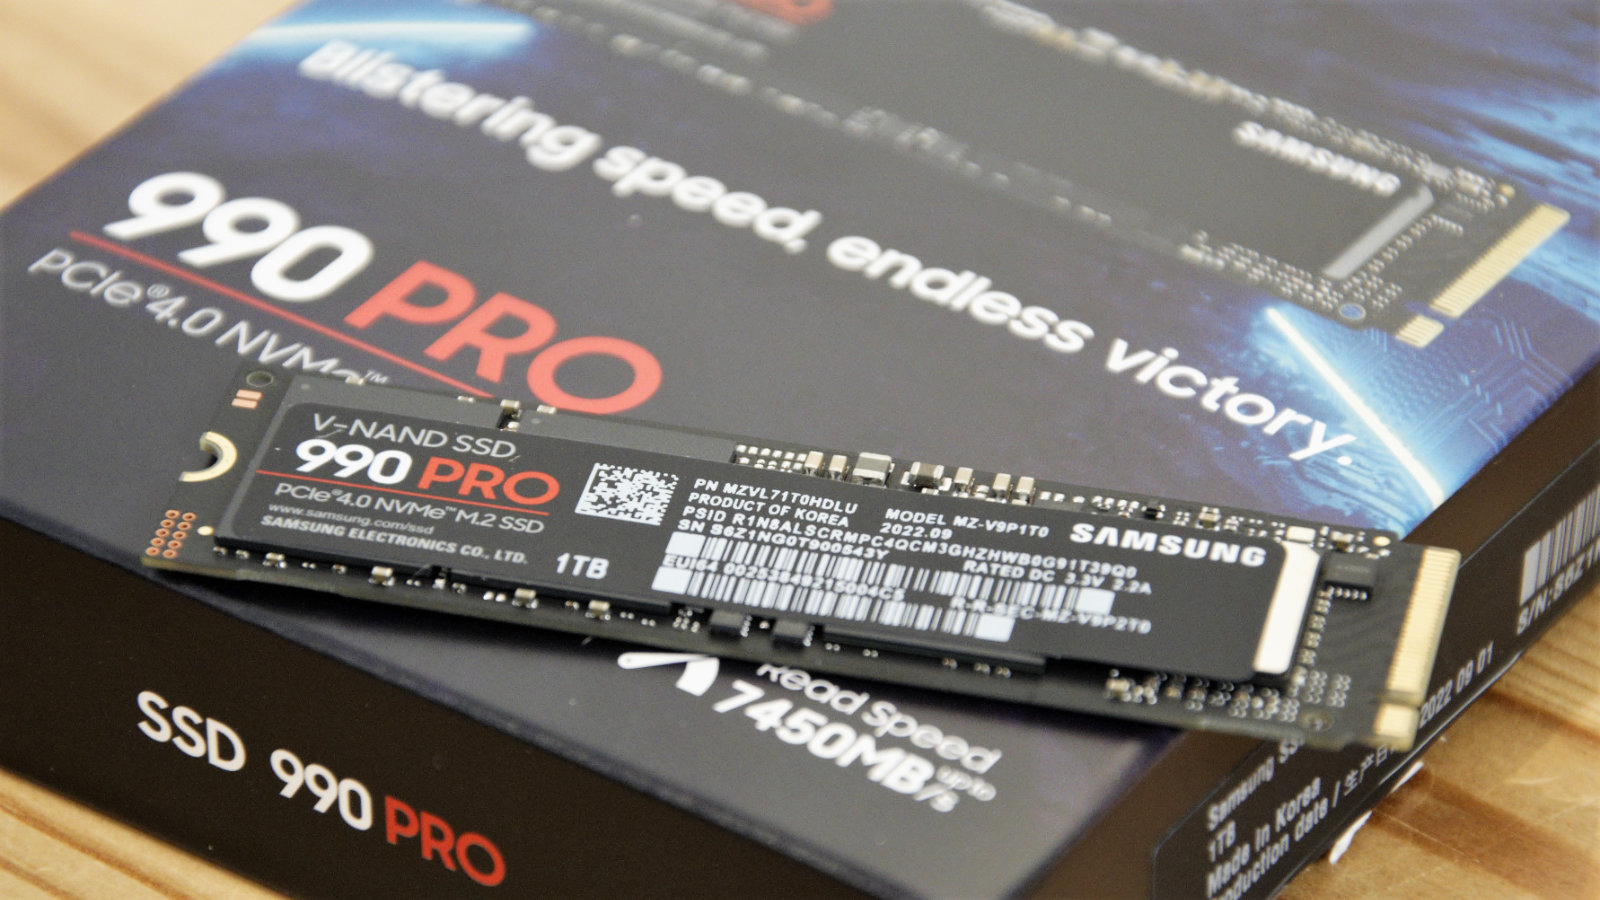 Samsung 990 Pro - Excellent PCIe 4.0 SSD